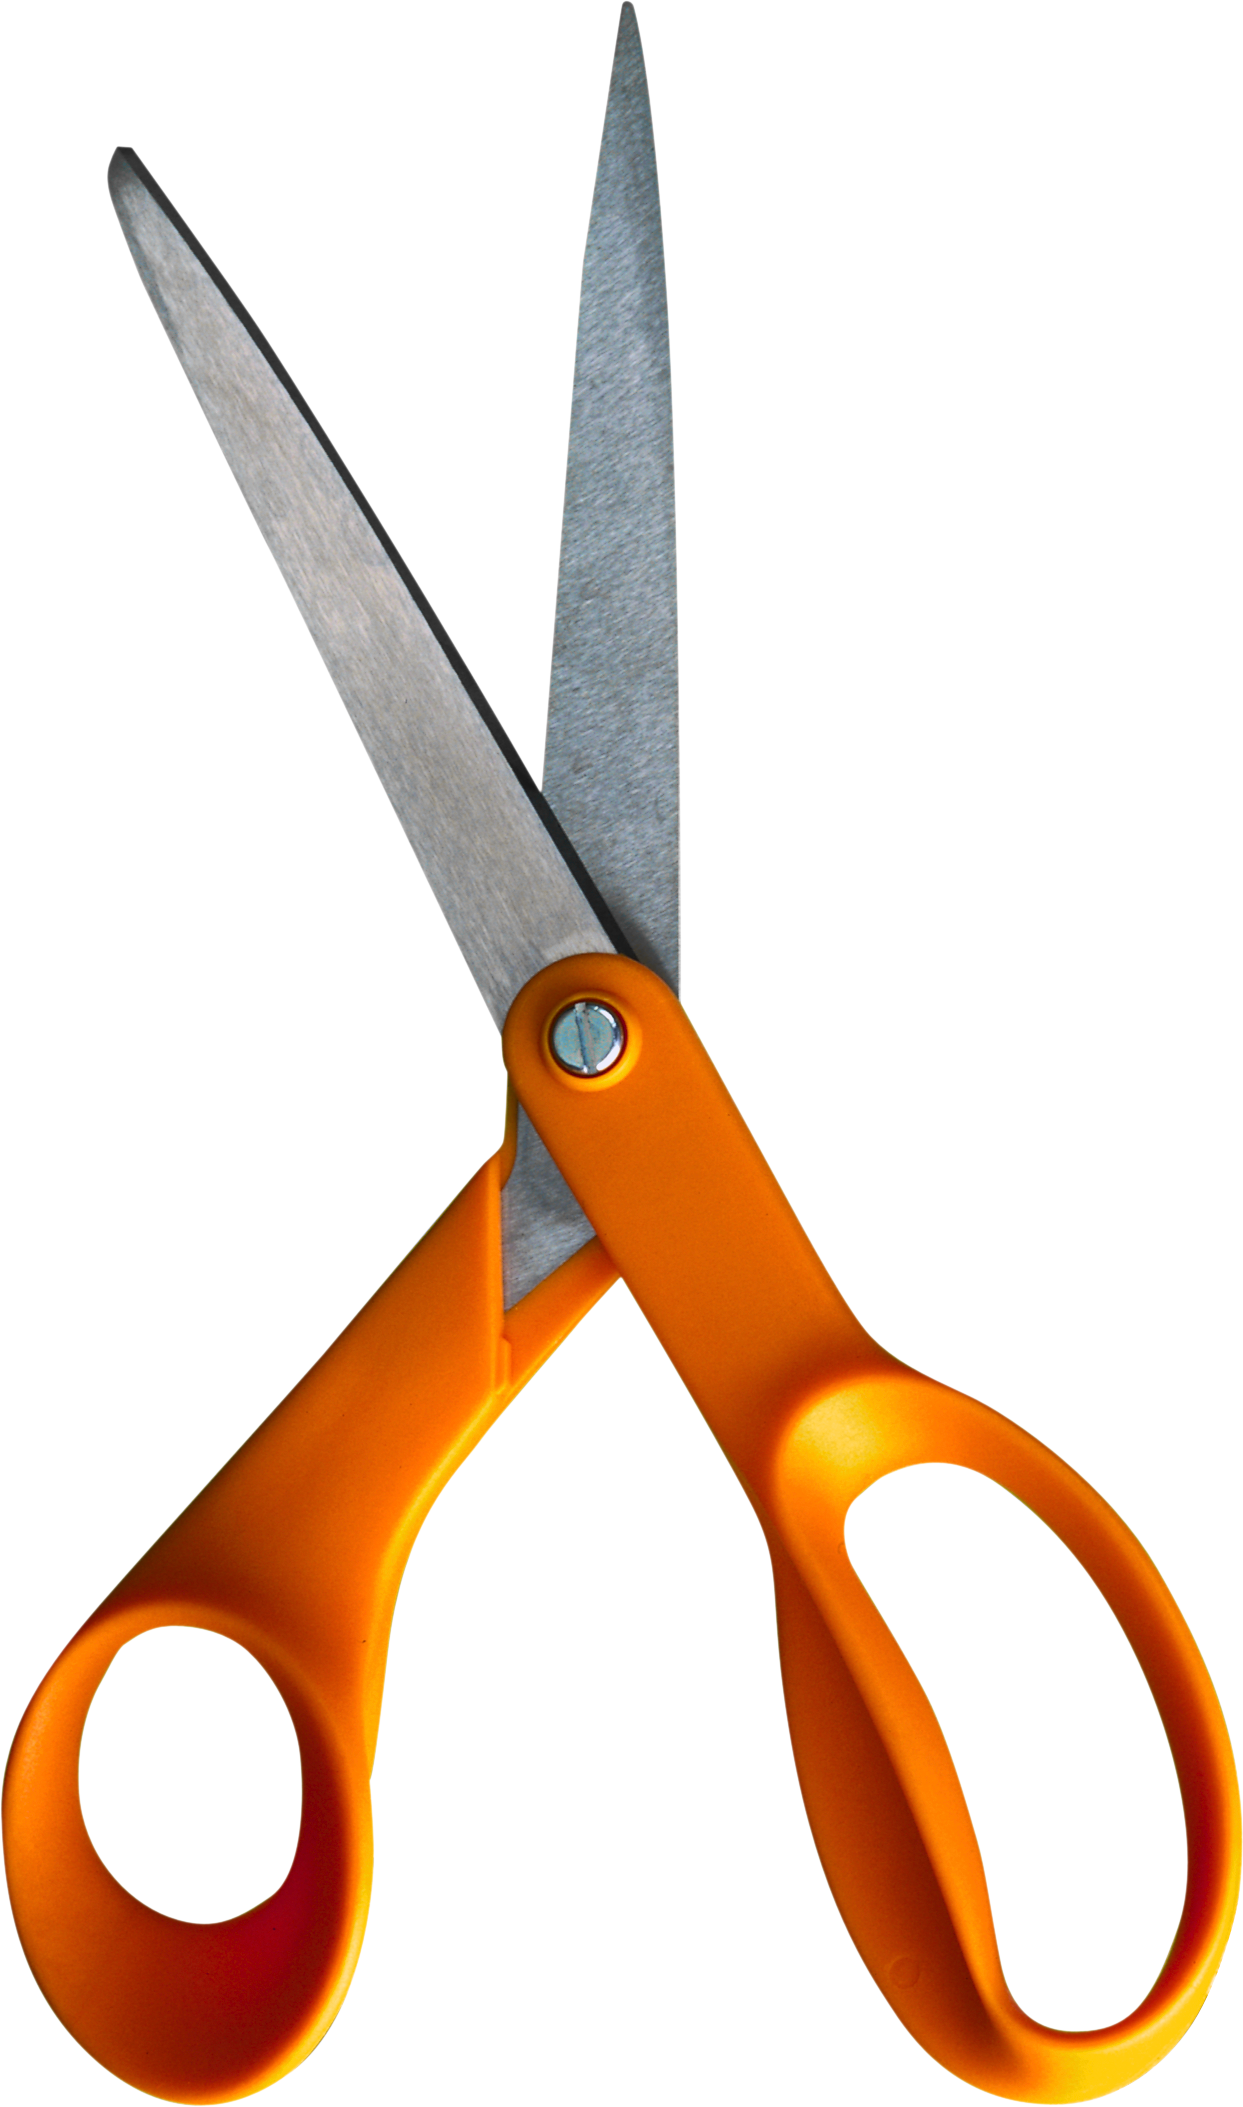 Orange Scissors PNG images  download